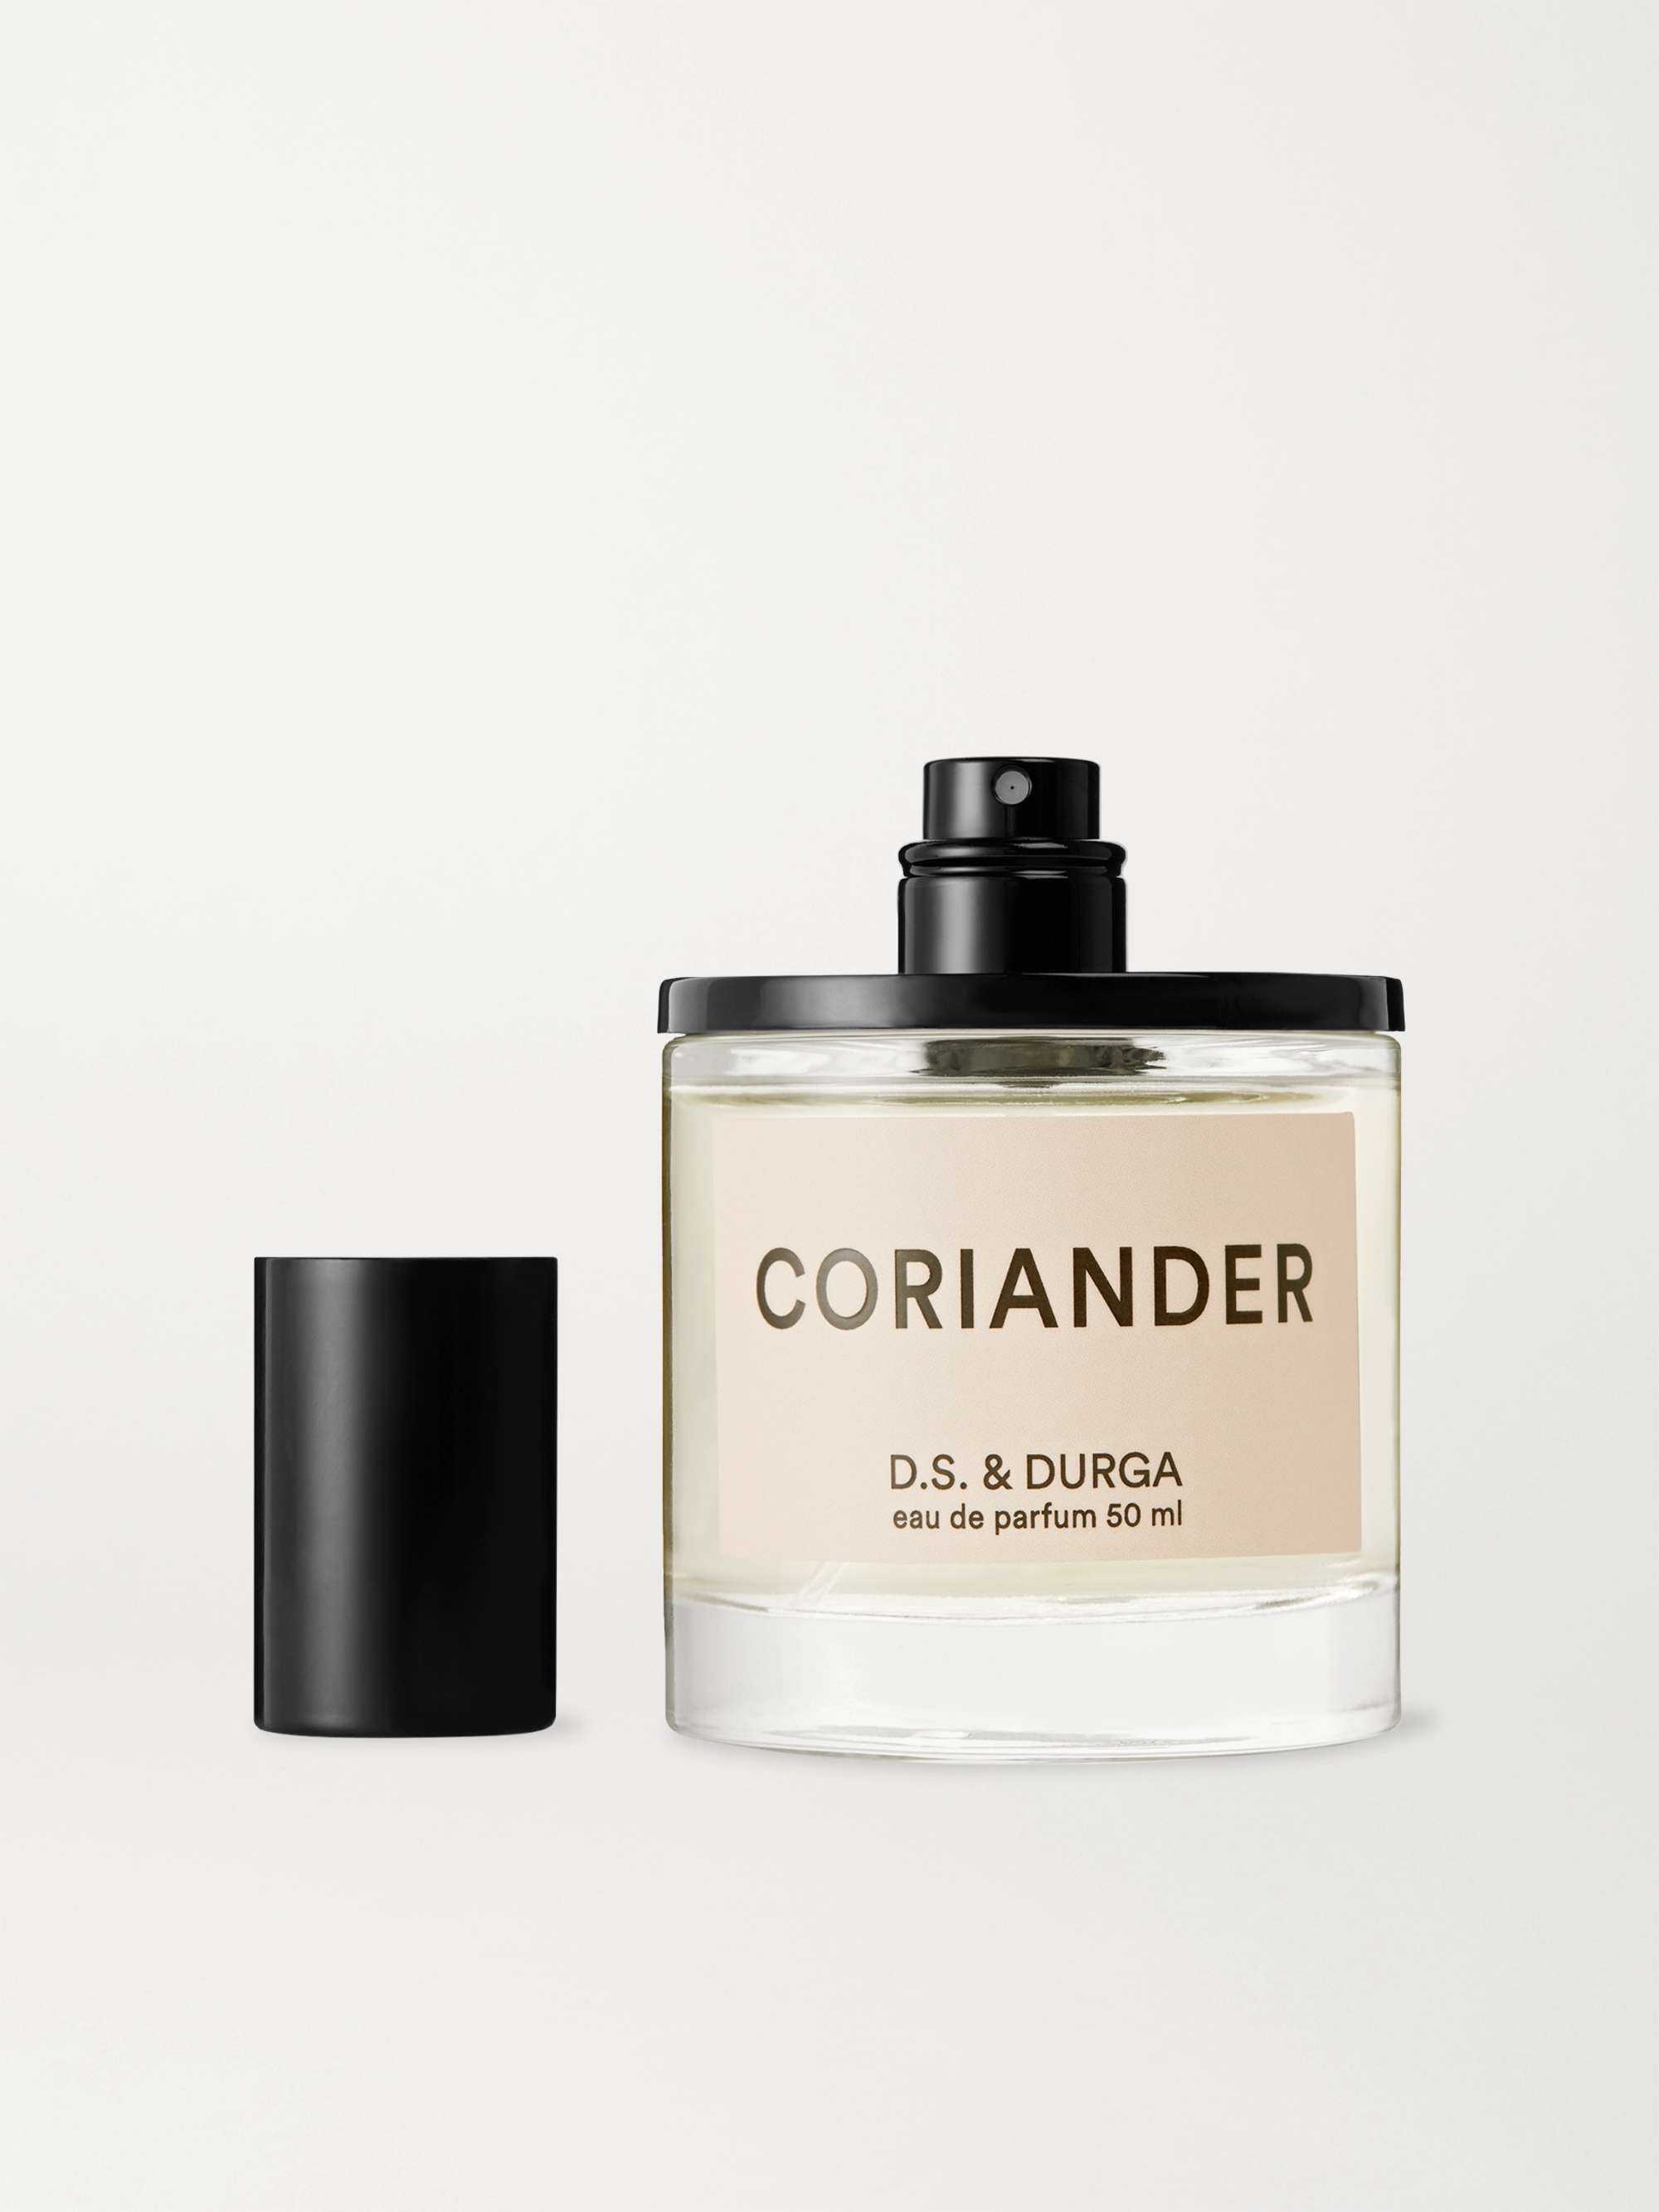 D.S. & DURGA Eau de Parfum - Coriander, 50ml